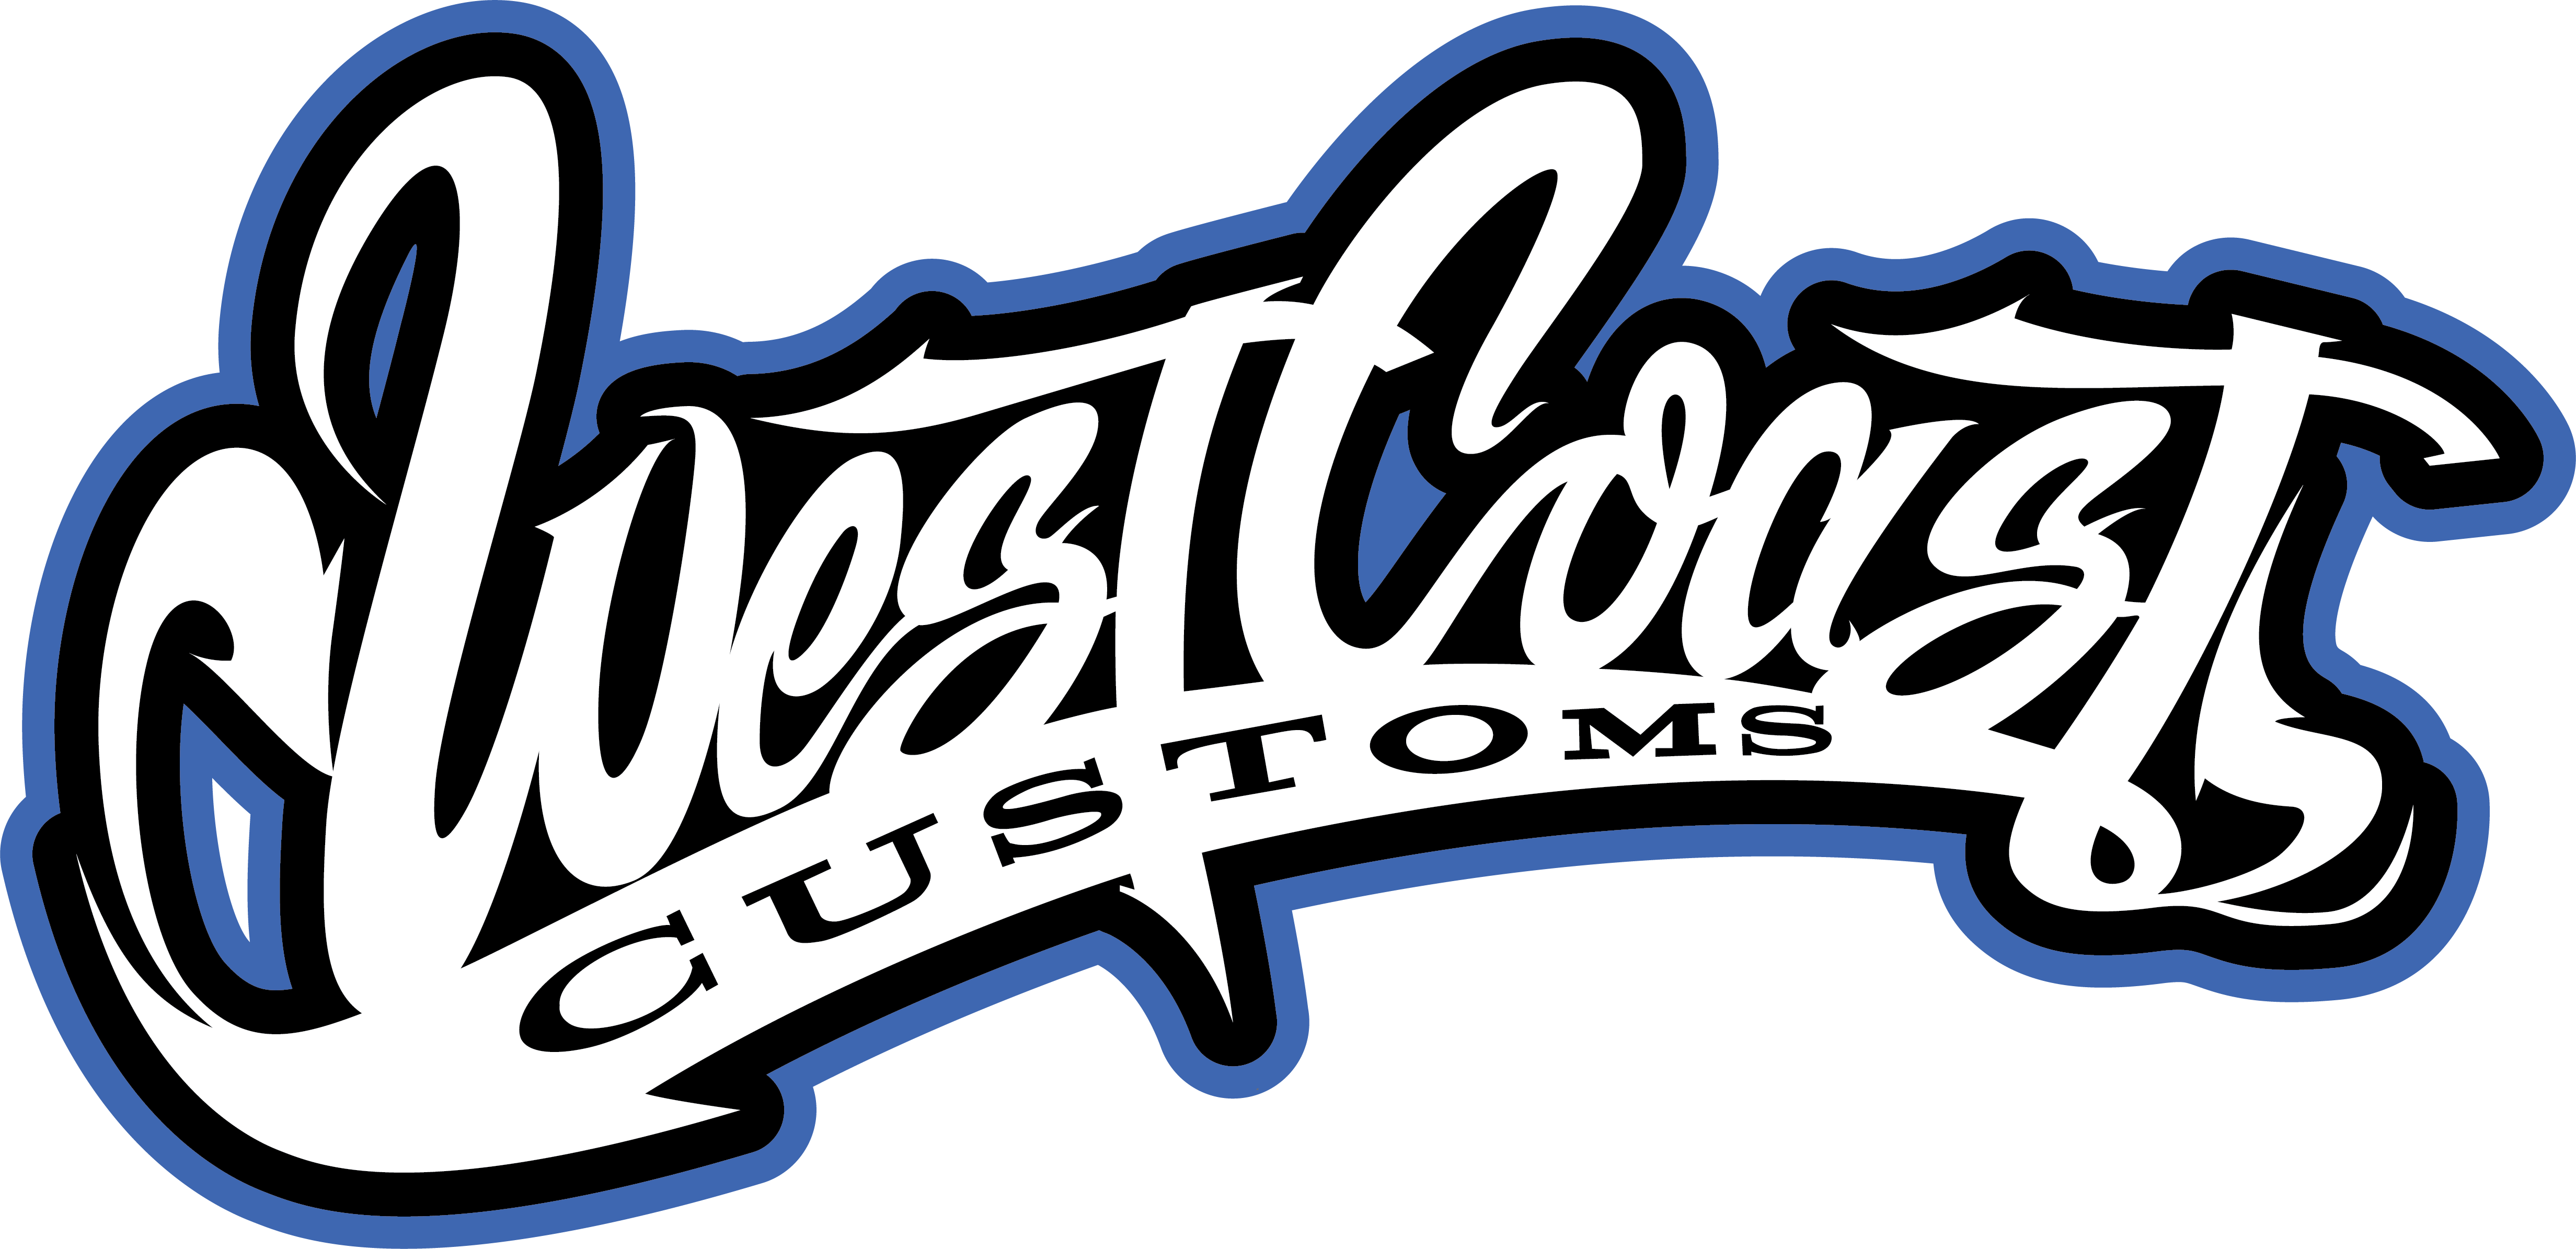 Мастерская West Coast Customs. Кастом логотип. West Coast лого. West Coast Customs машины. Western coast